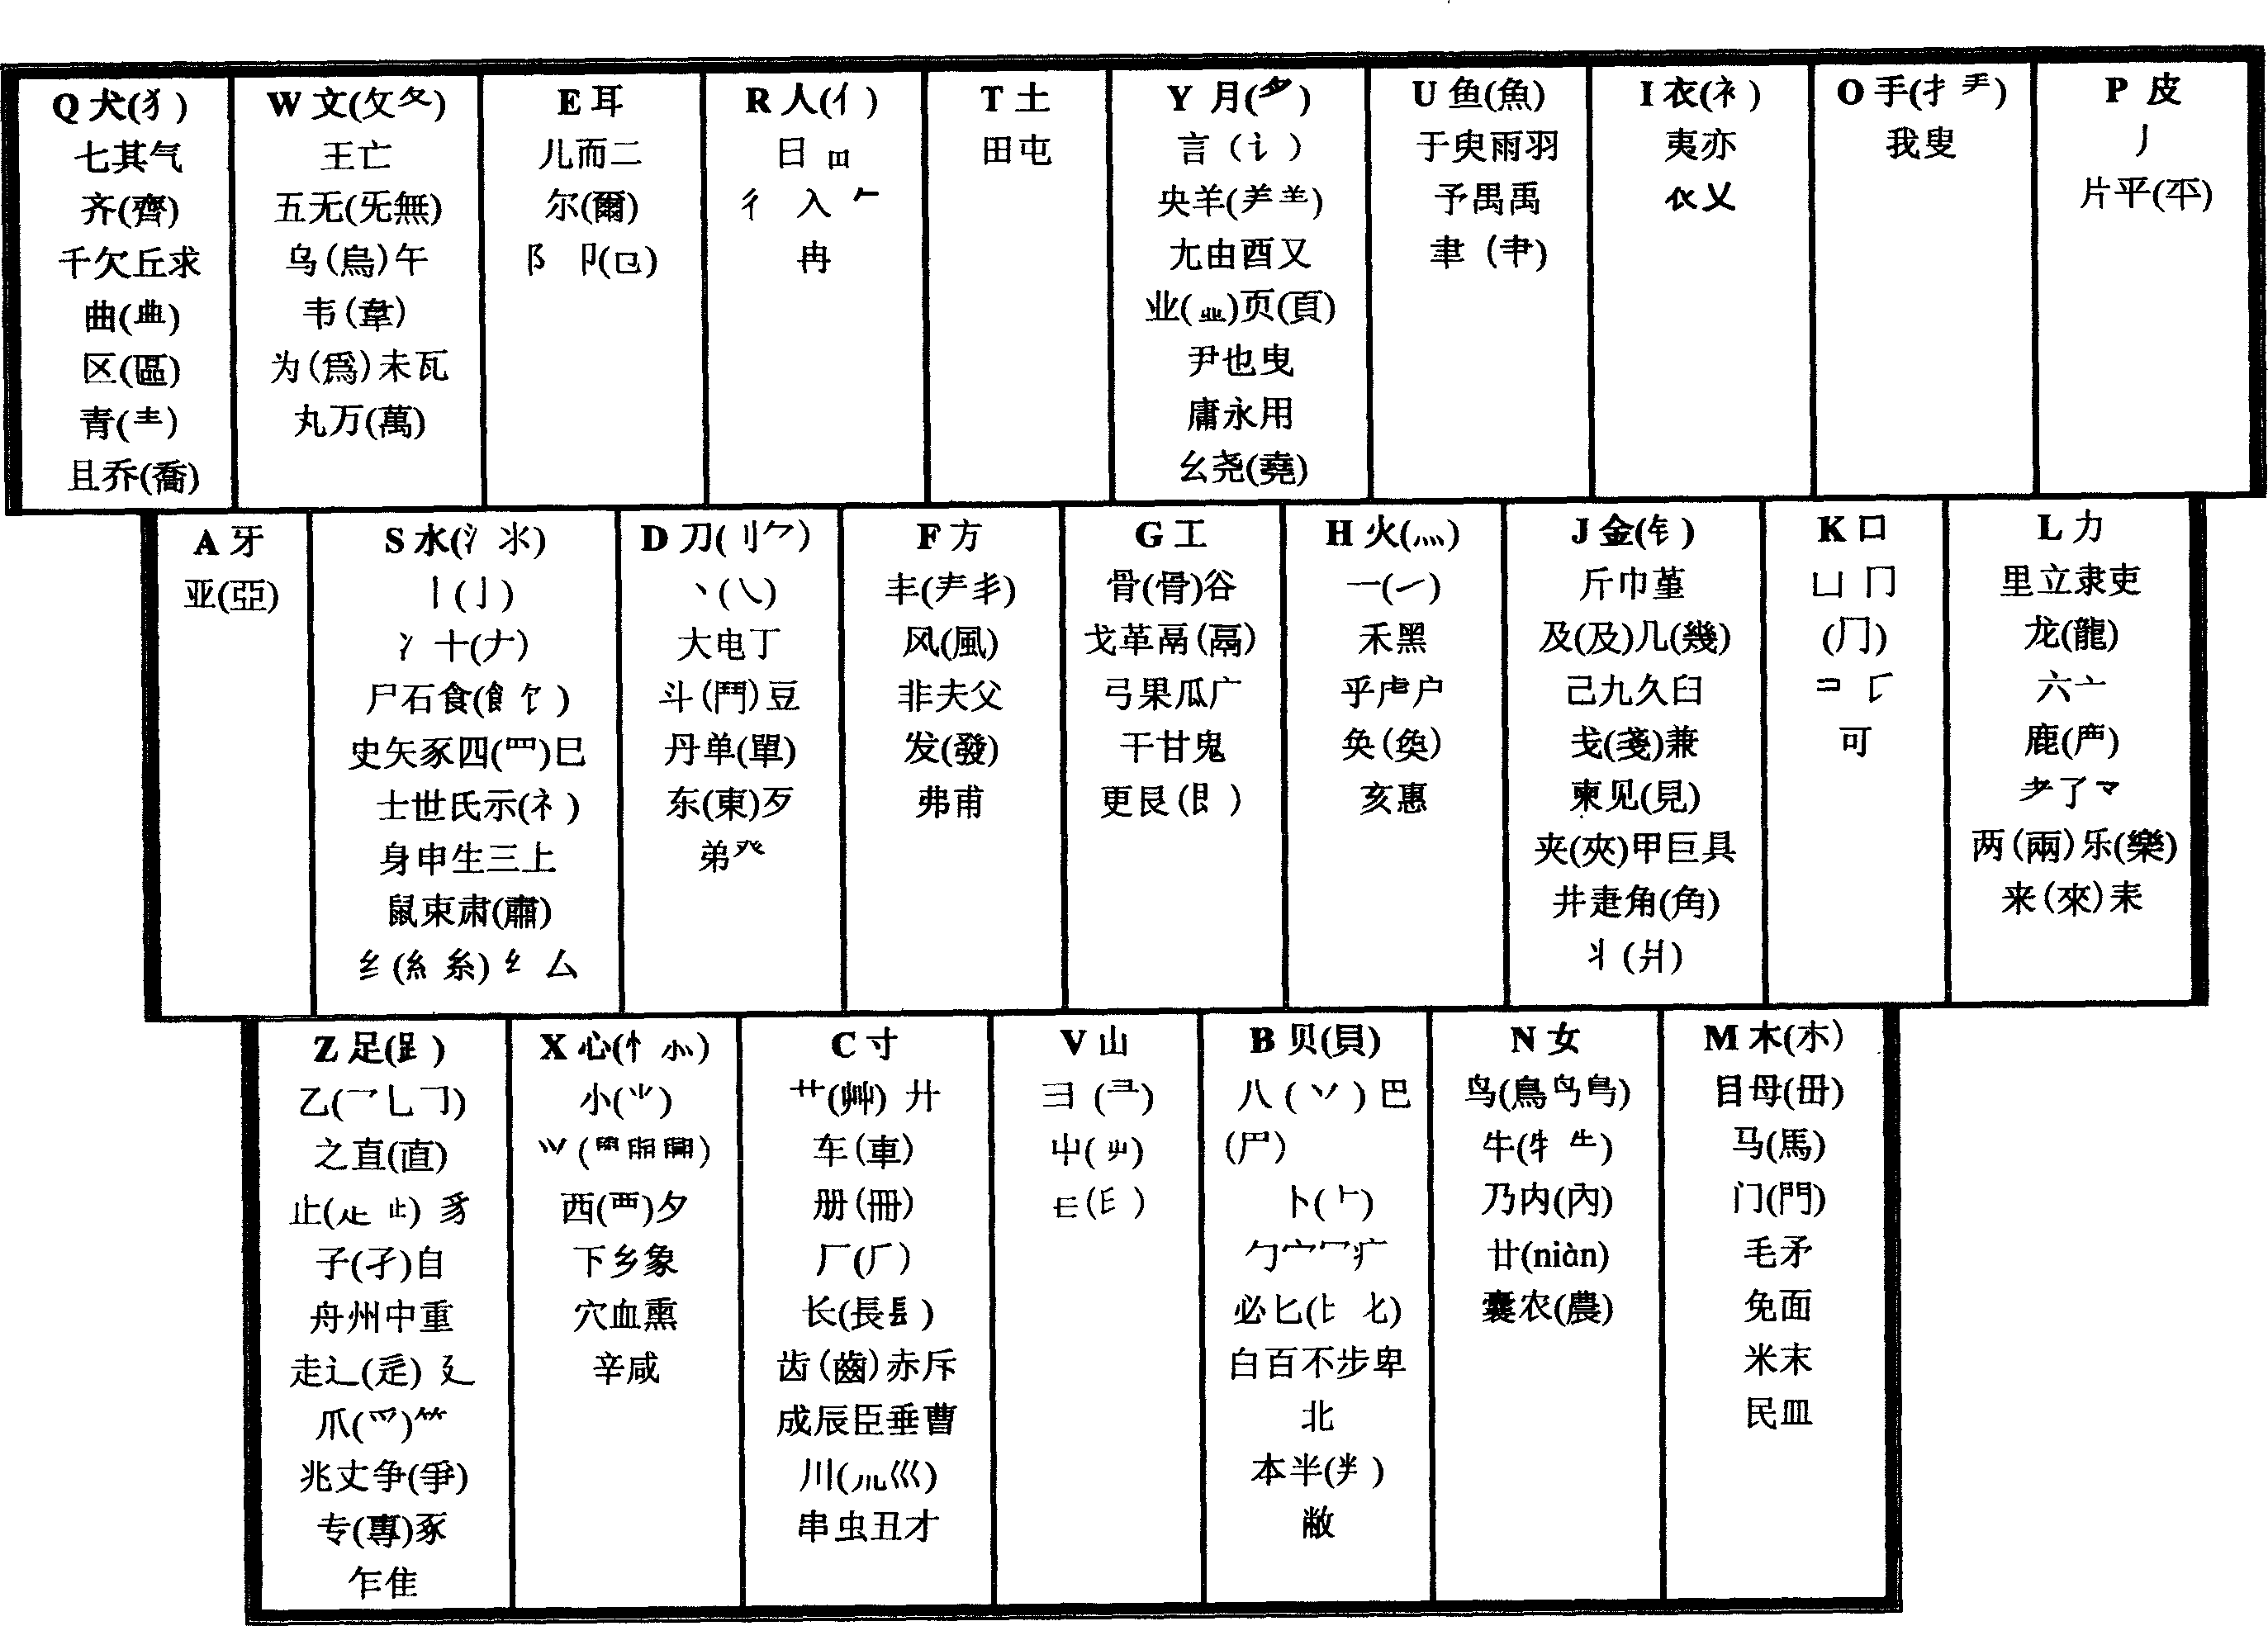 Multidimensional Chinese character encoding input method